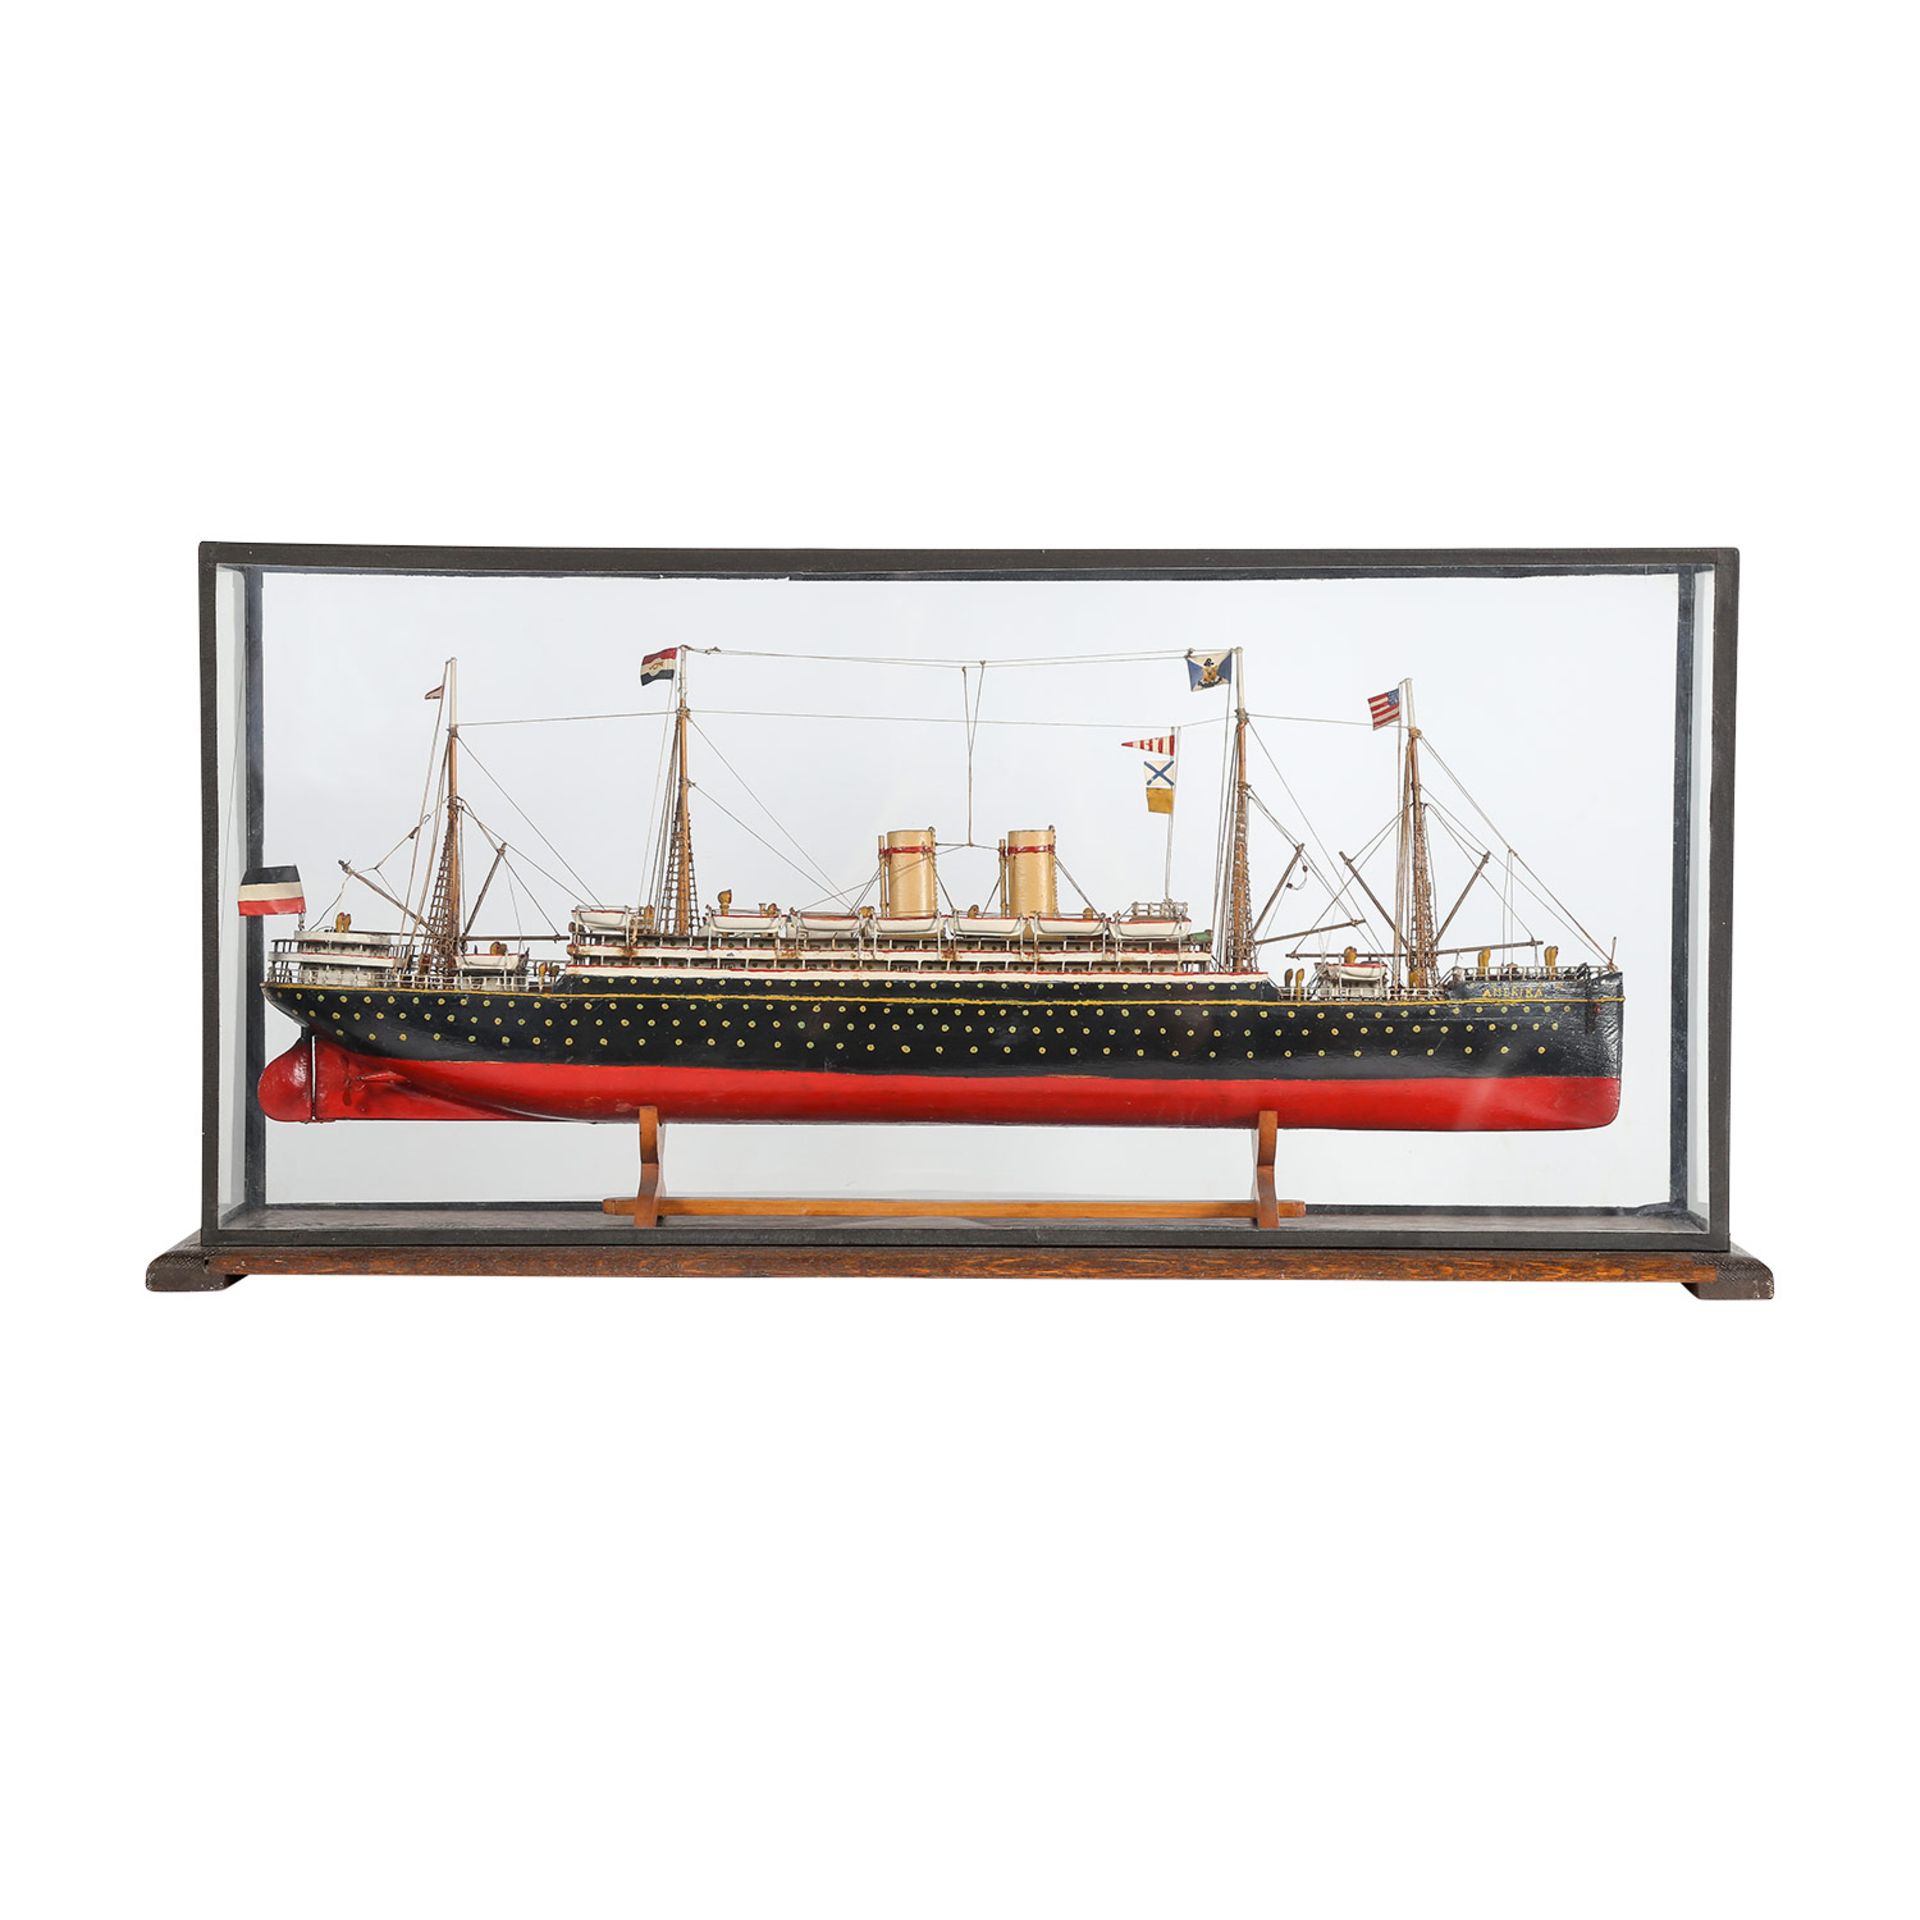 MODELL-DAMPFER "AMERIKA"Holz/Metall, großes Schiffsmodell der "AMERIKA", Glasvitrine (besch.) L: